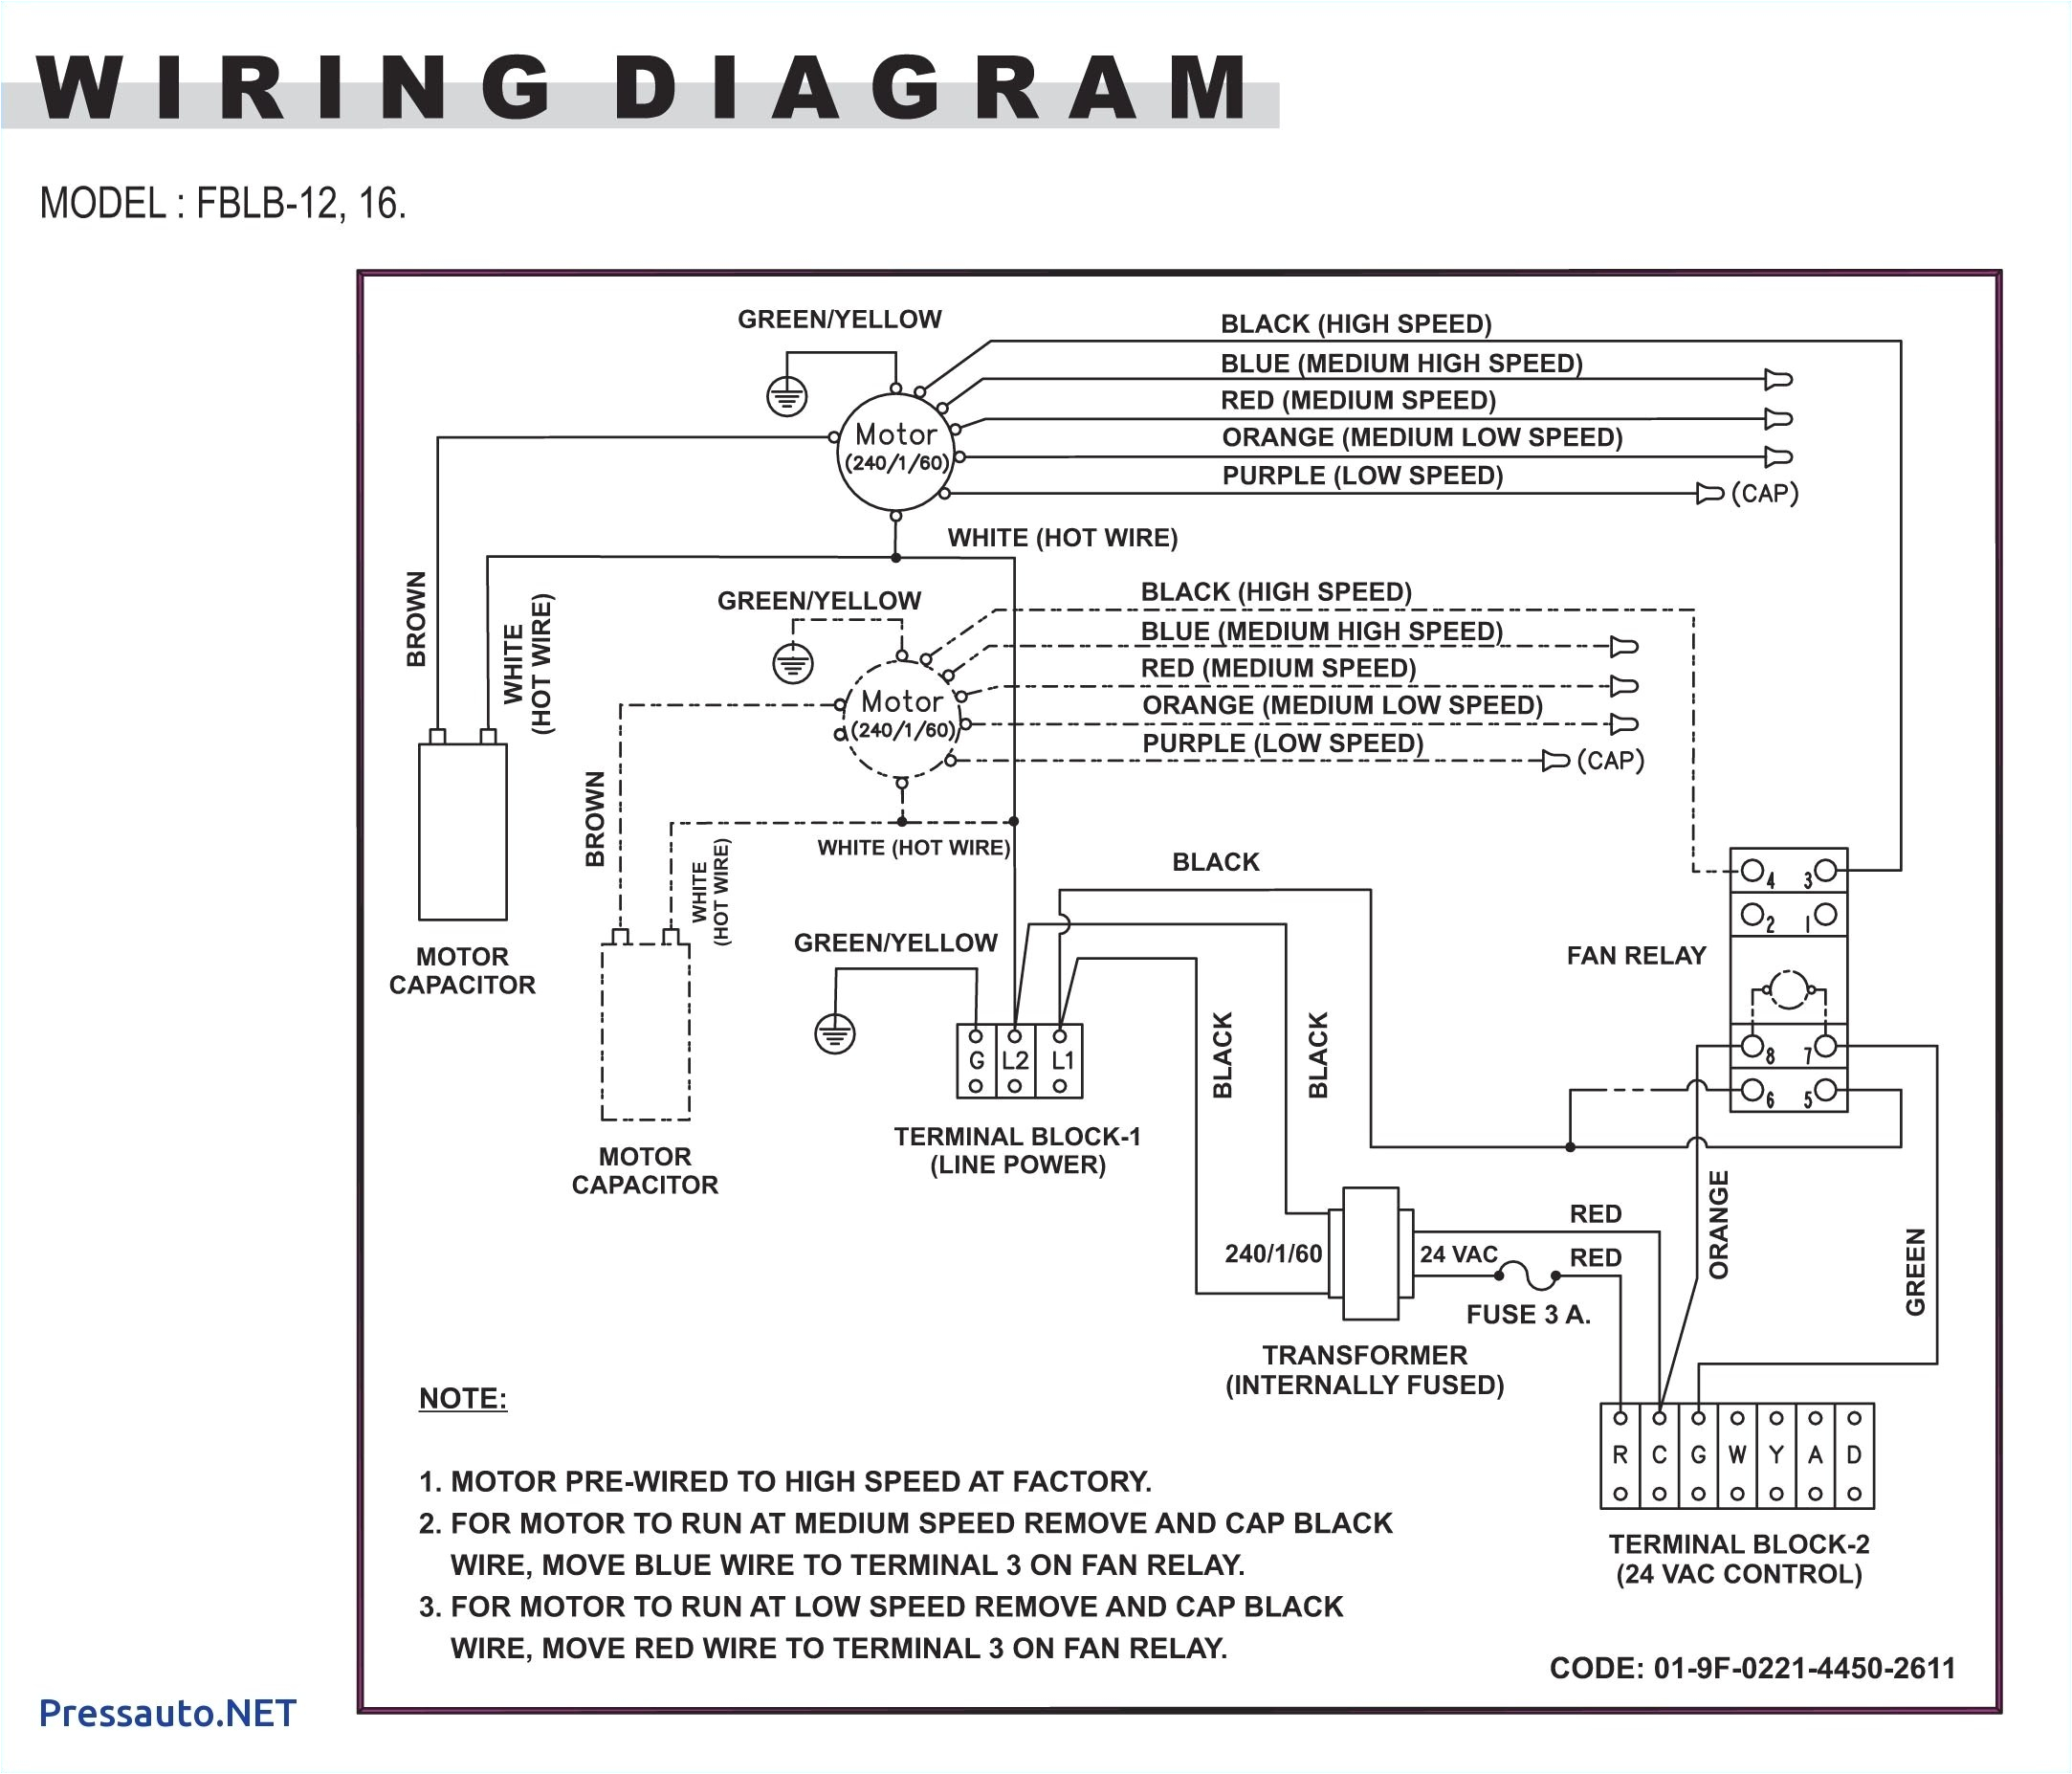 fostoria heater wiring diagram wiring diagram cadet baseboard heater fresh quartz tube heater rh rccarsusa 6d jpg